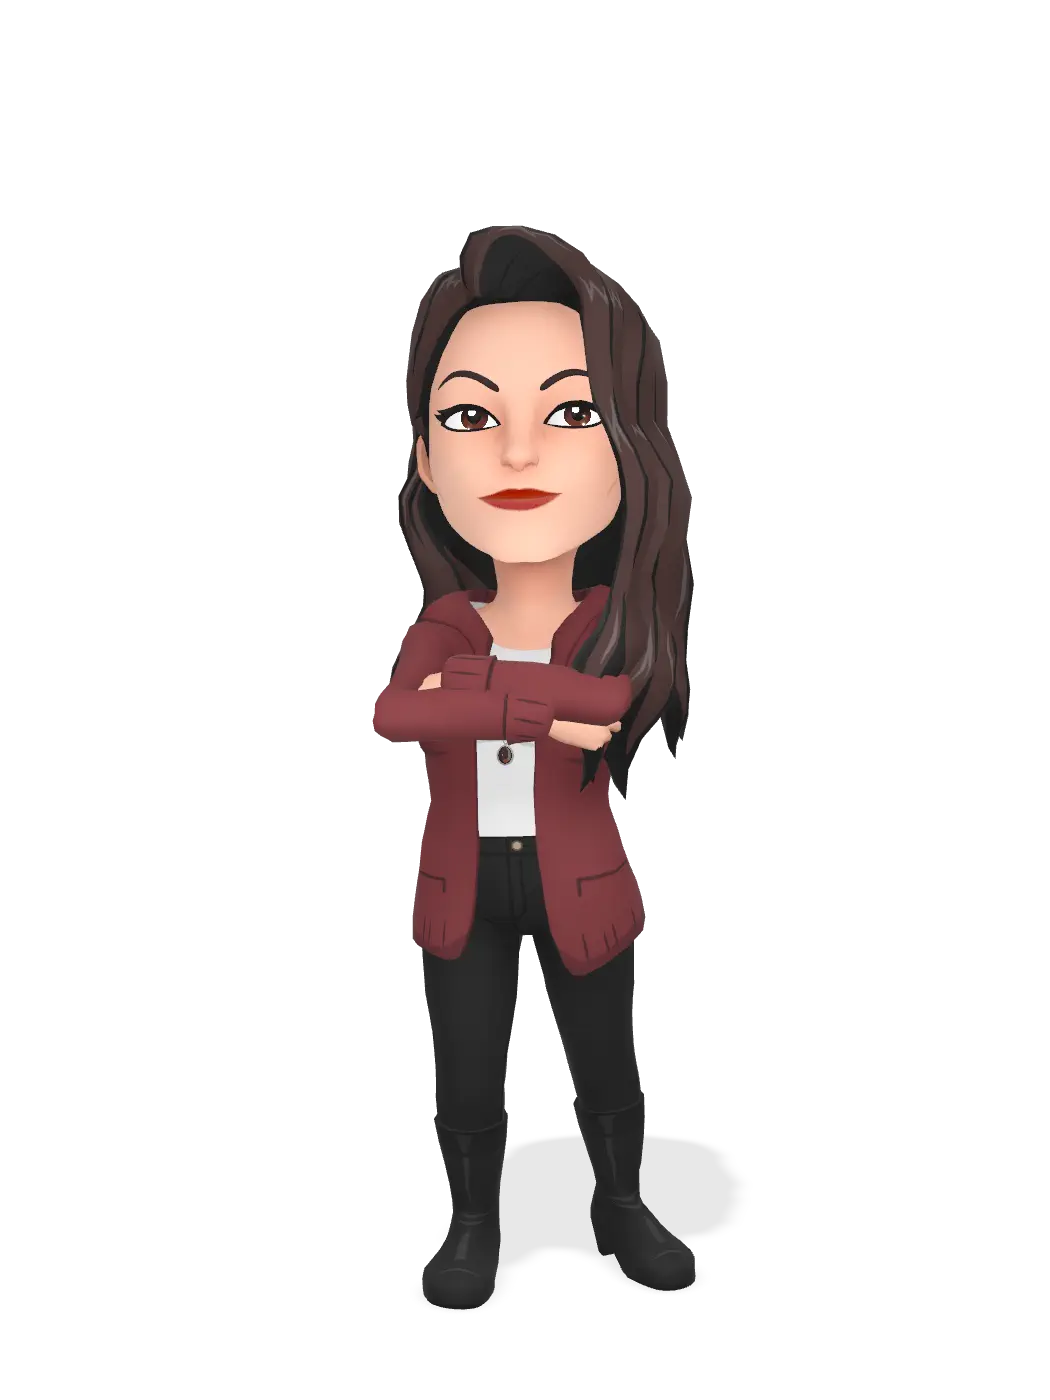 3D Bitmoji for sararosso avatar